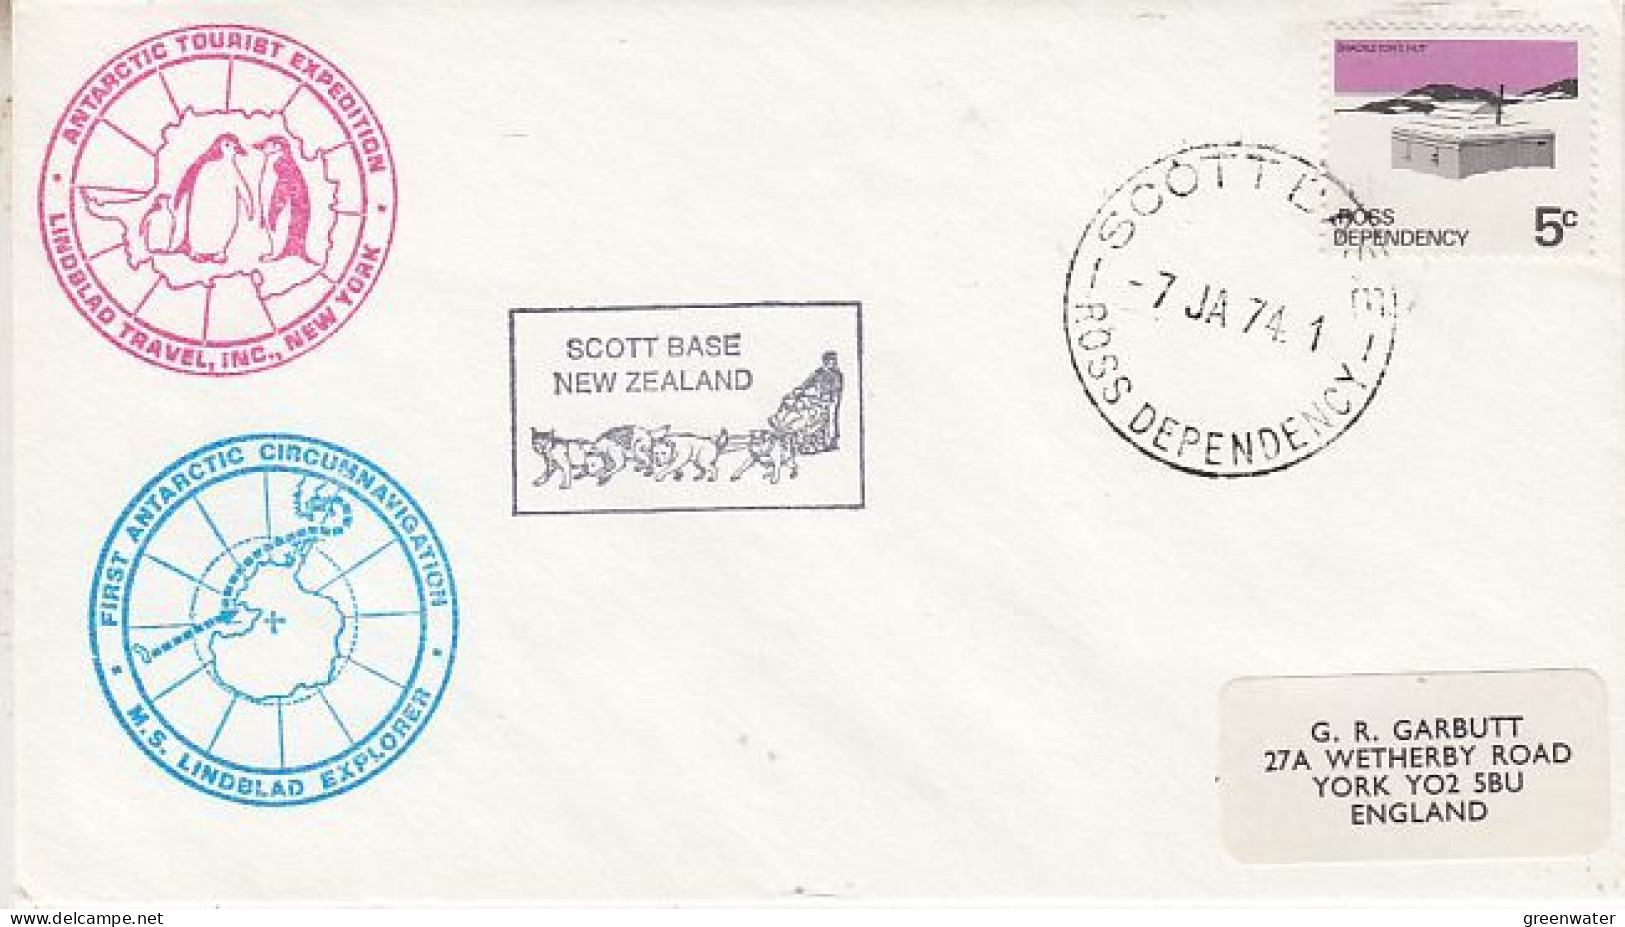 Ross Dependency Lindblad Travel 1st Antarctic Circummavigation Ca Scott Base 7 JA 1974 (RT224) - Lettres & Documents